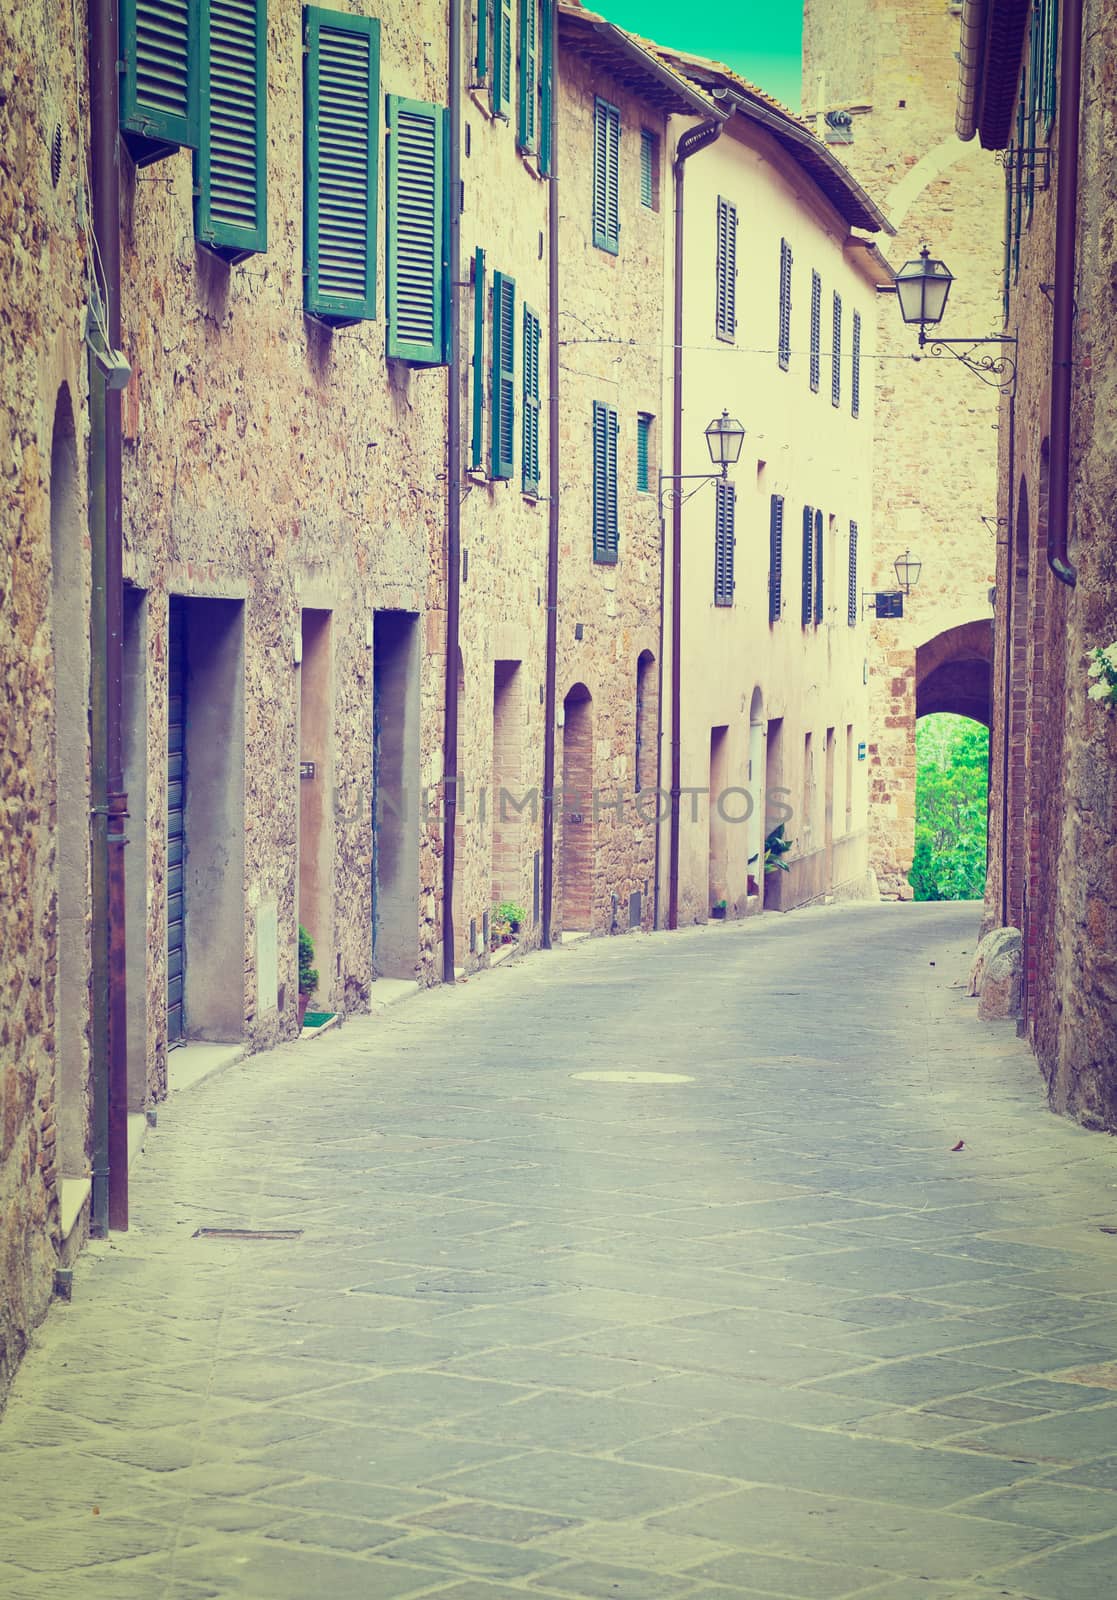 Narrow Alley  in the Italian City of Cetona, Instagram Effect